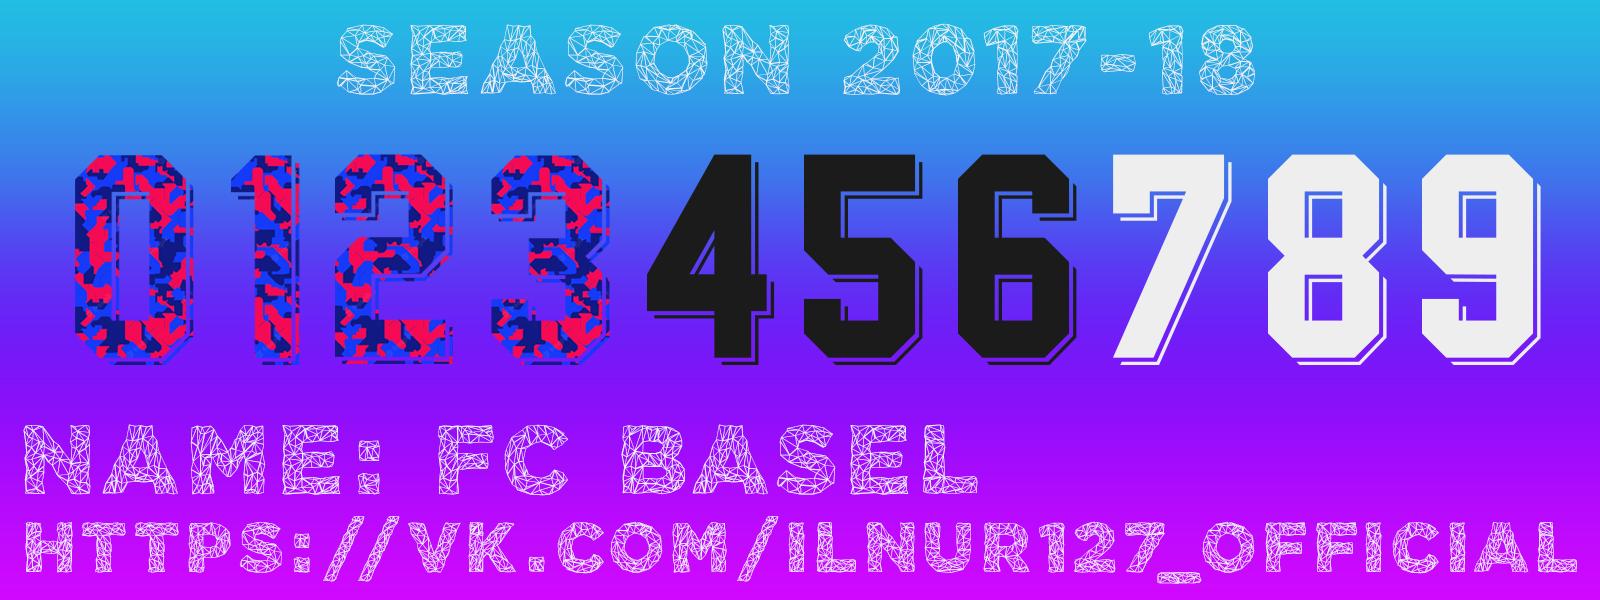 FC Basel 2017-18 (kitnumbers).png